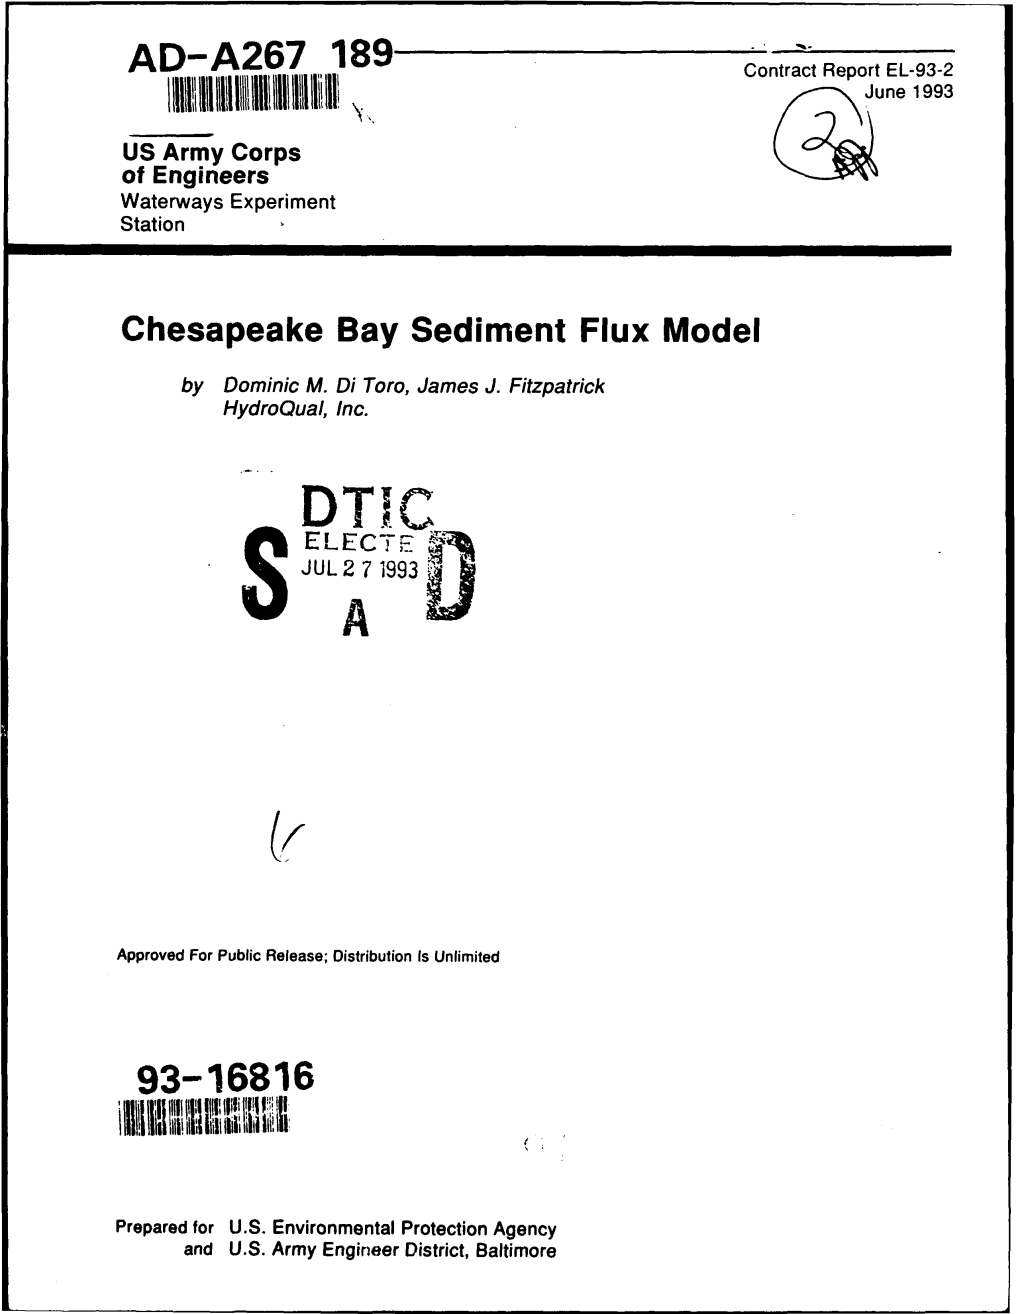 Chesapeake Bay Sediment Flux Model